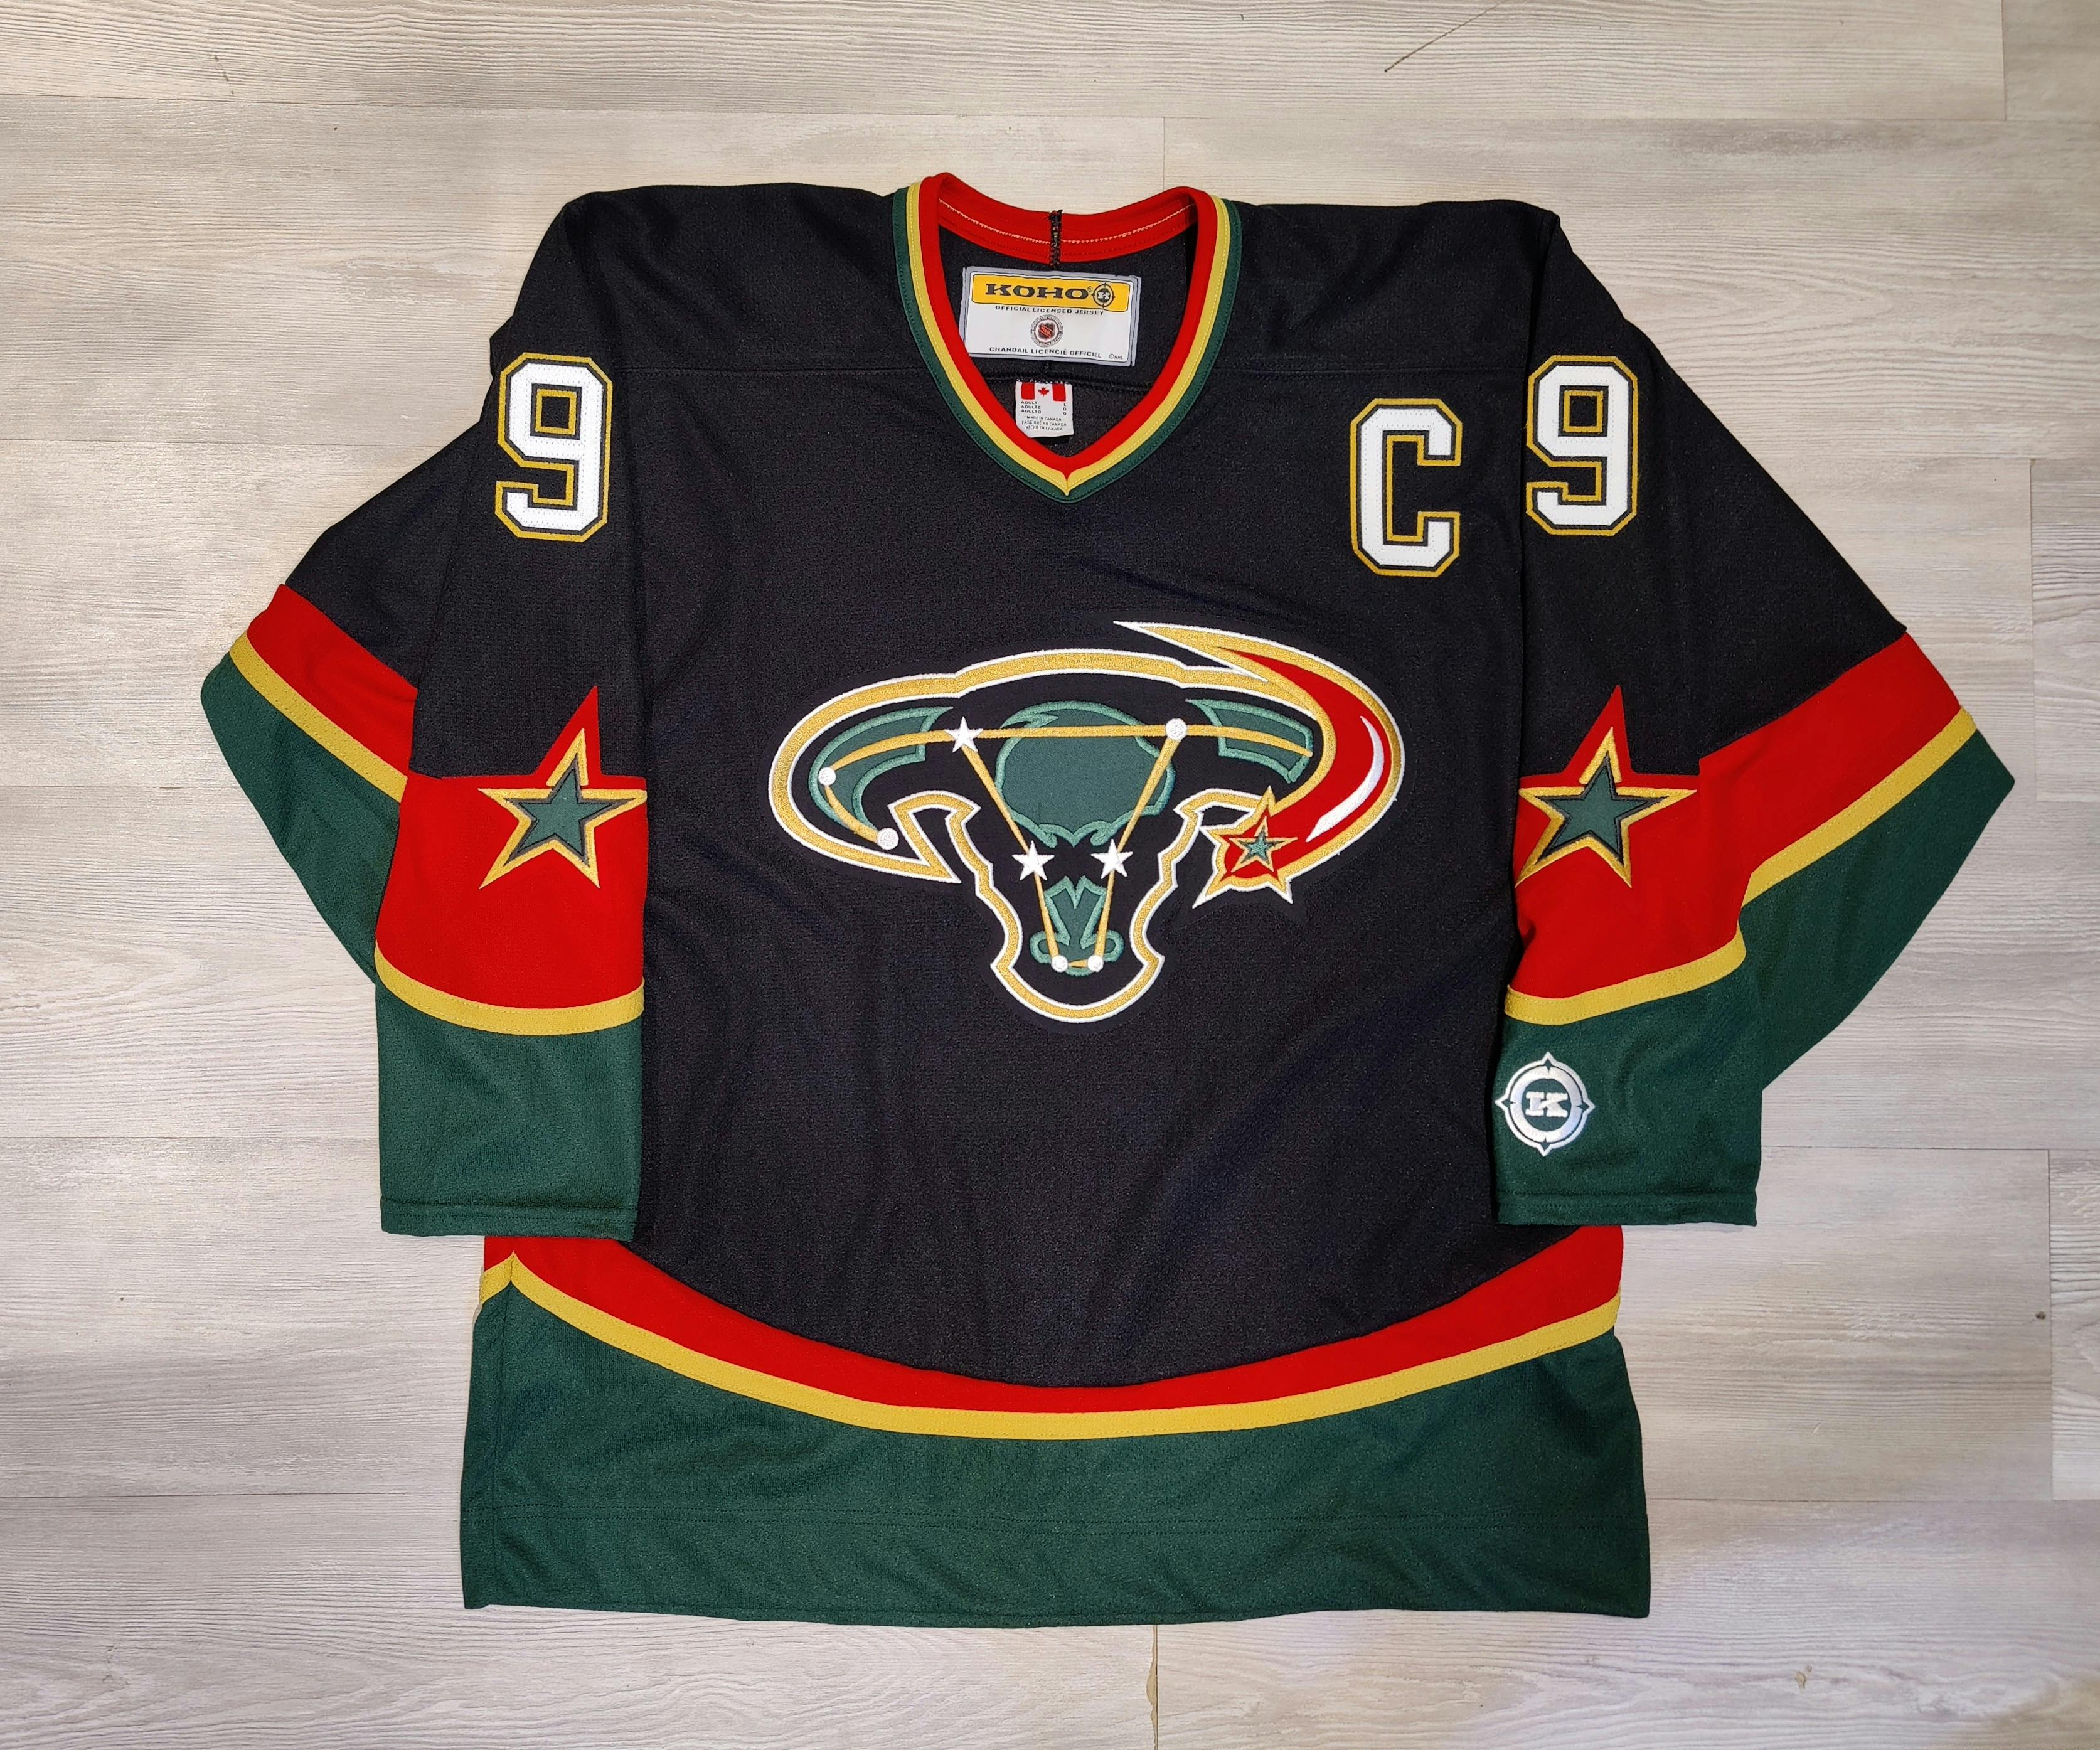 KOHO DALLAS STARS Mooterus NHL Hockey Jersey Black Alternate Large L RARE  $279.99 - PicClick